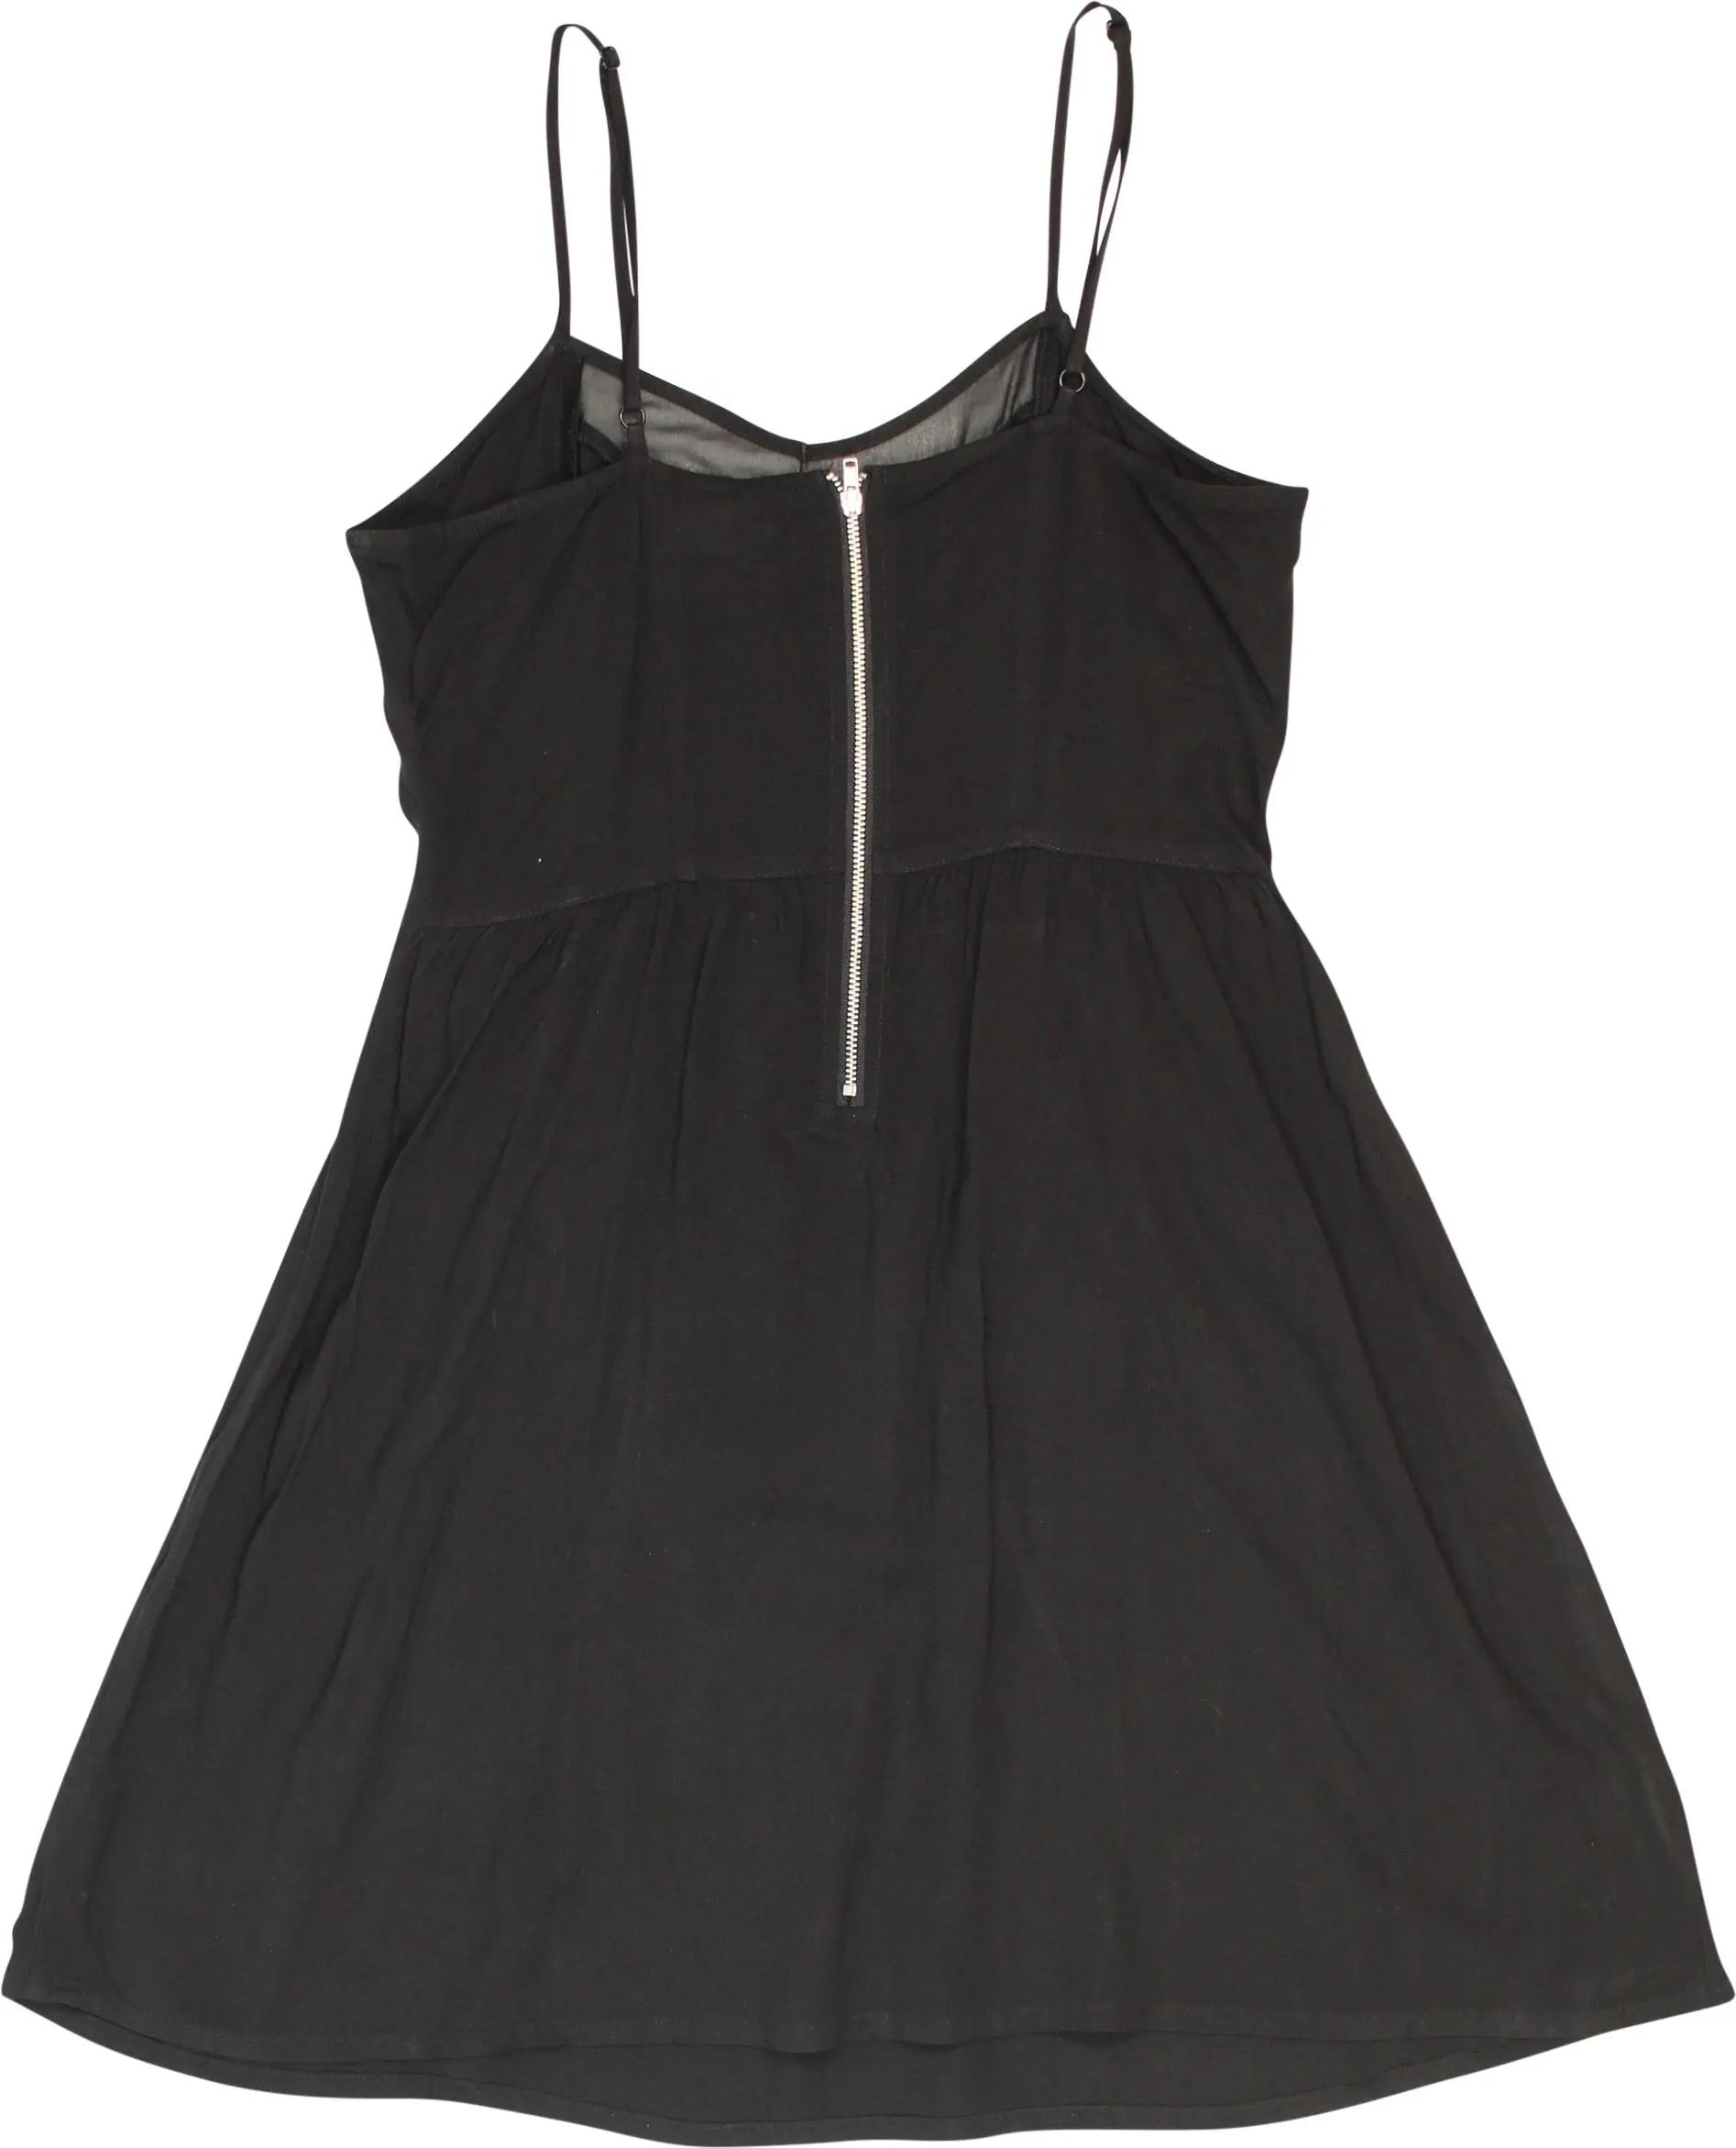 H&M - Black Dress- ThriftTale.com - Vintage and second handclothing